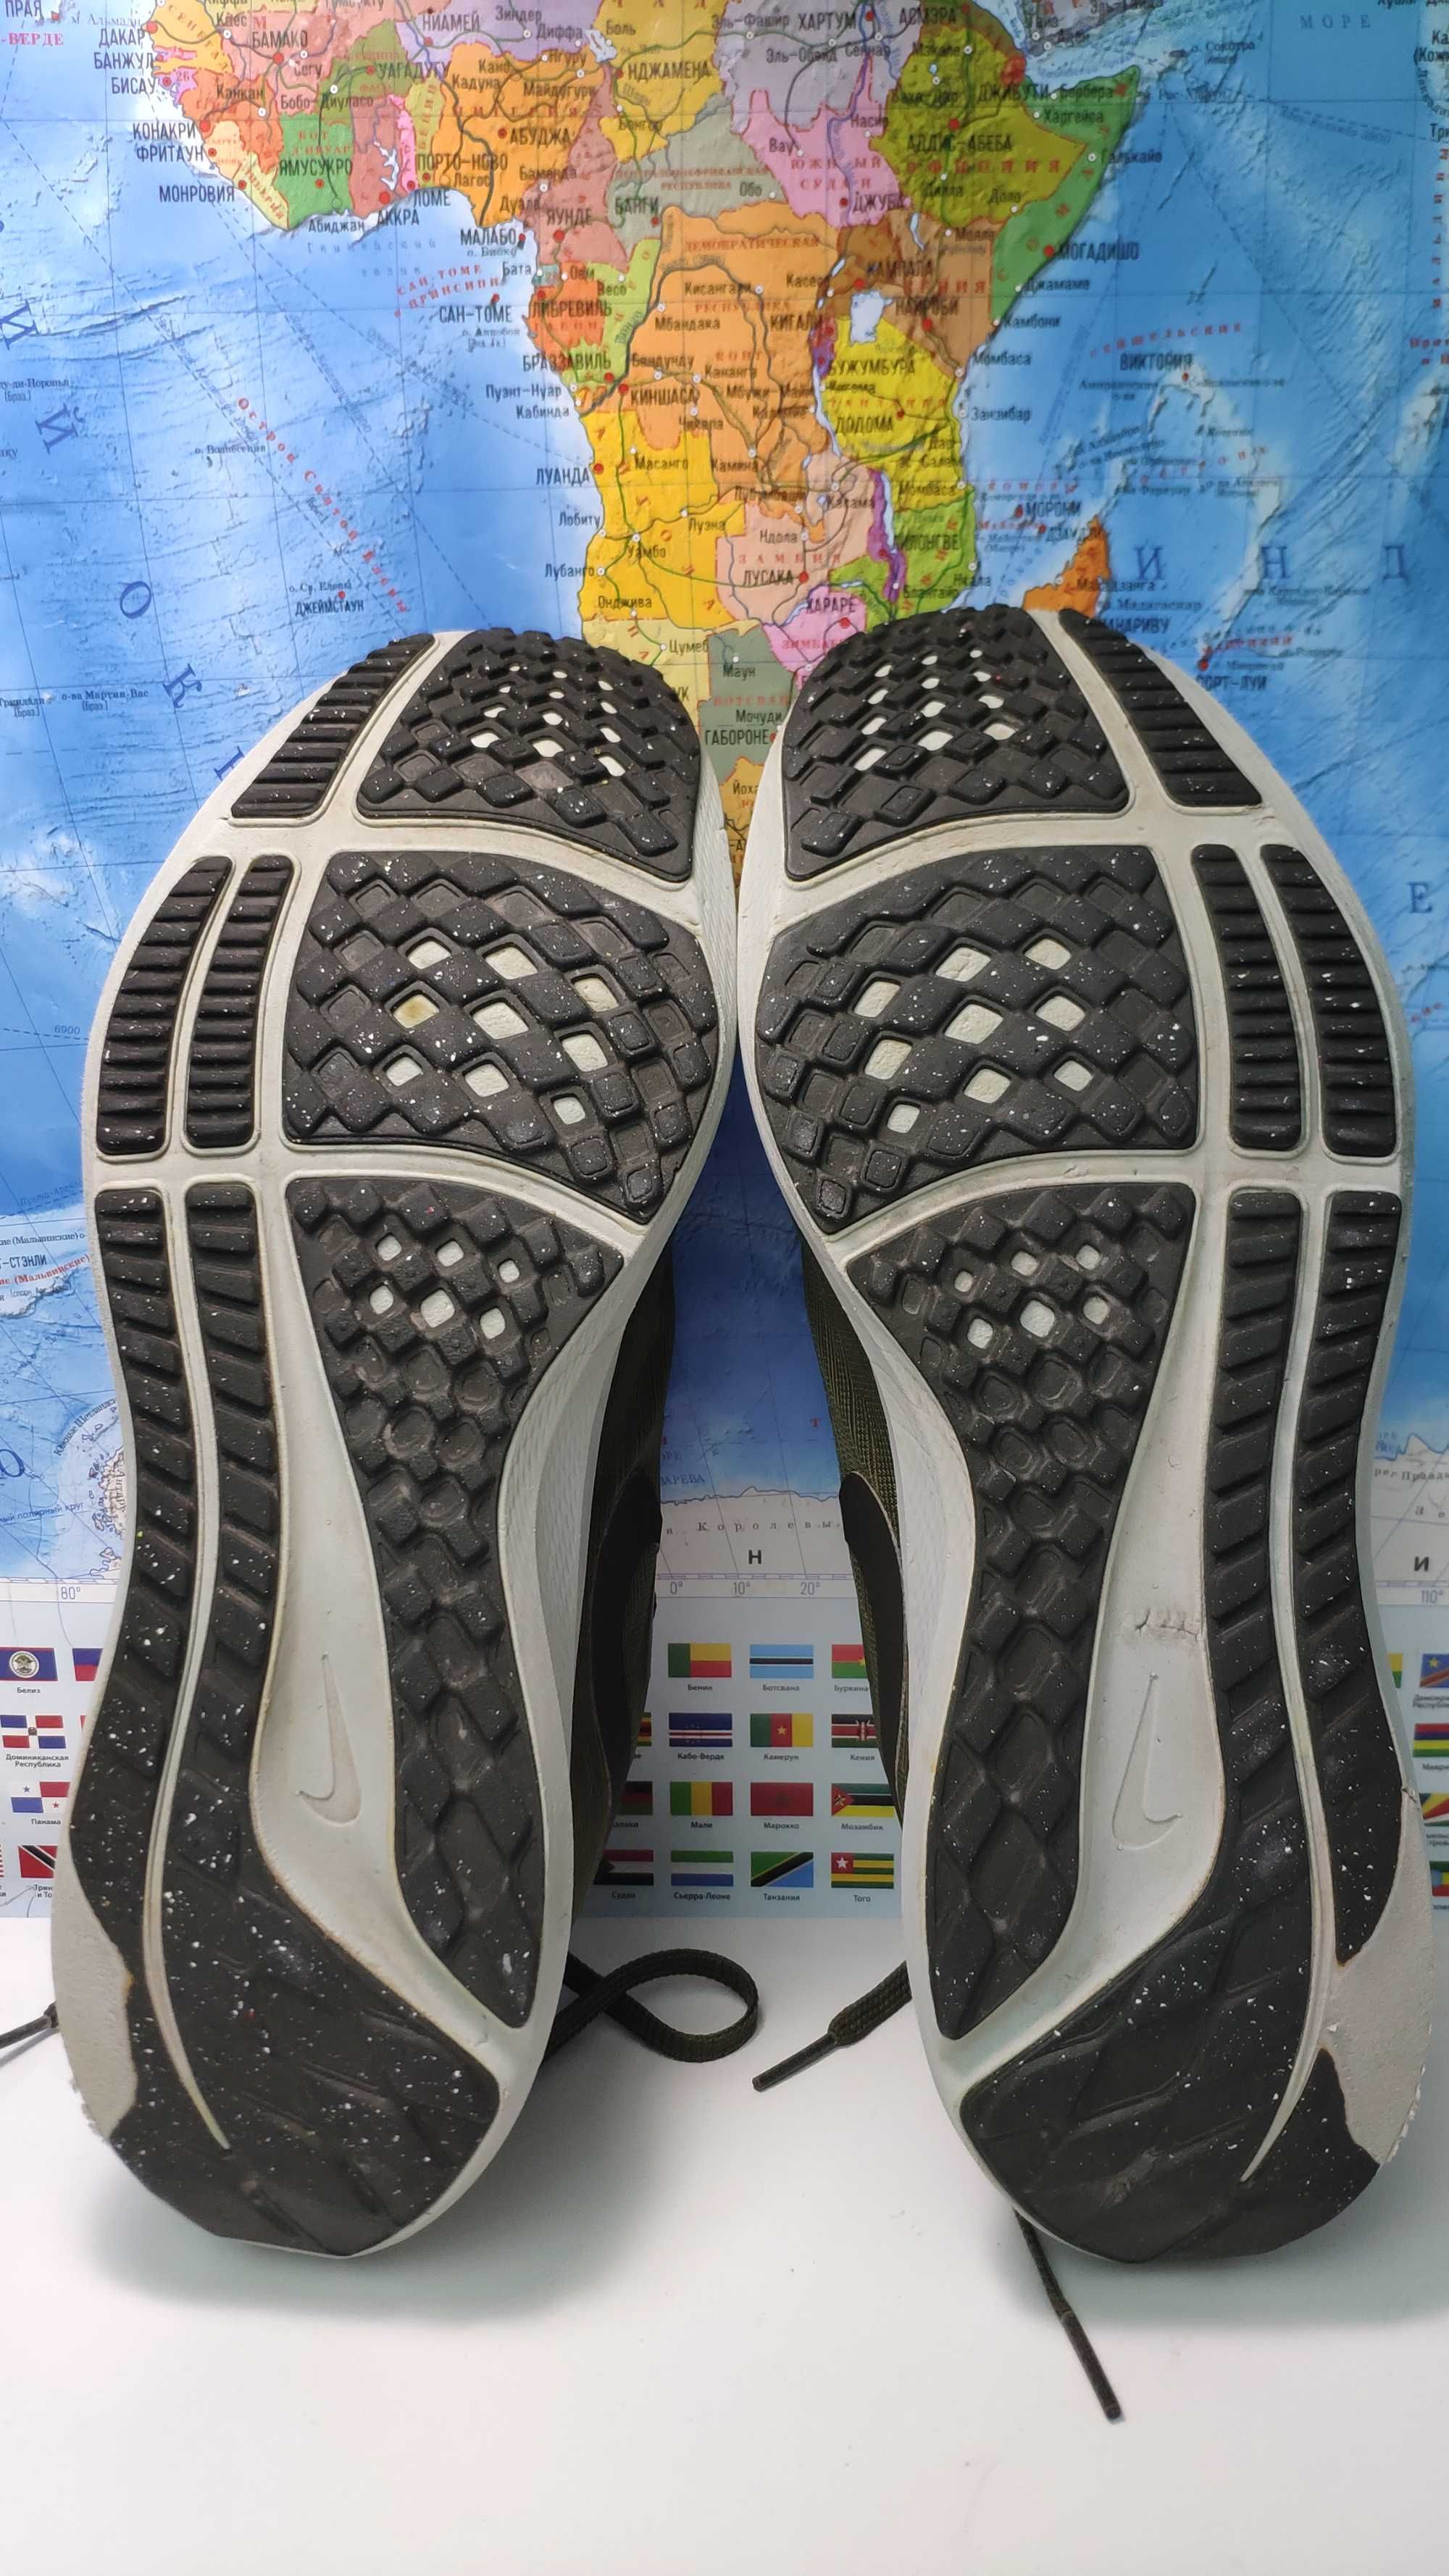 Кроссовки для бега Nike pegasus 39